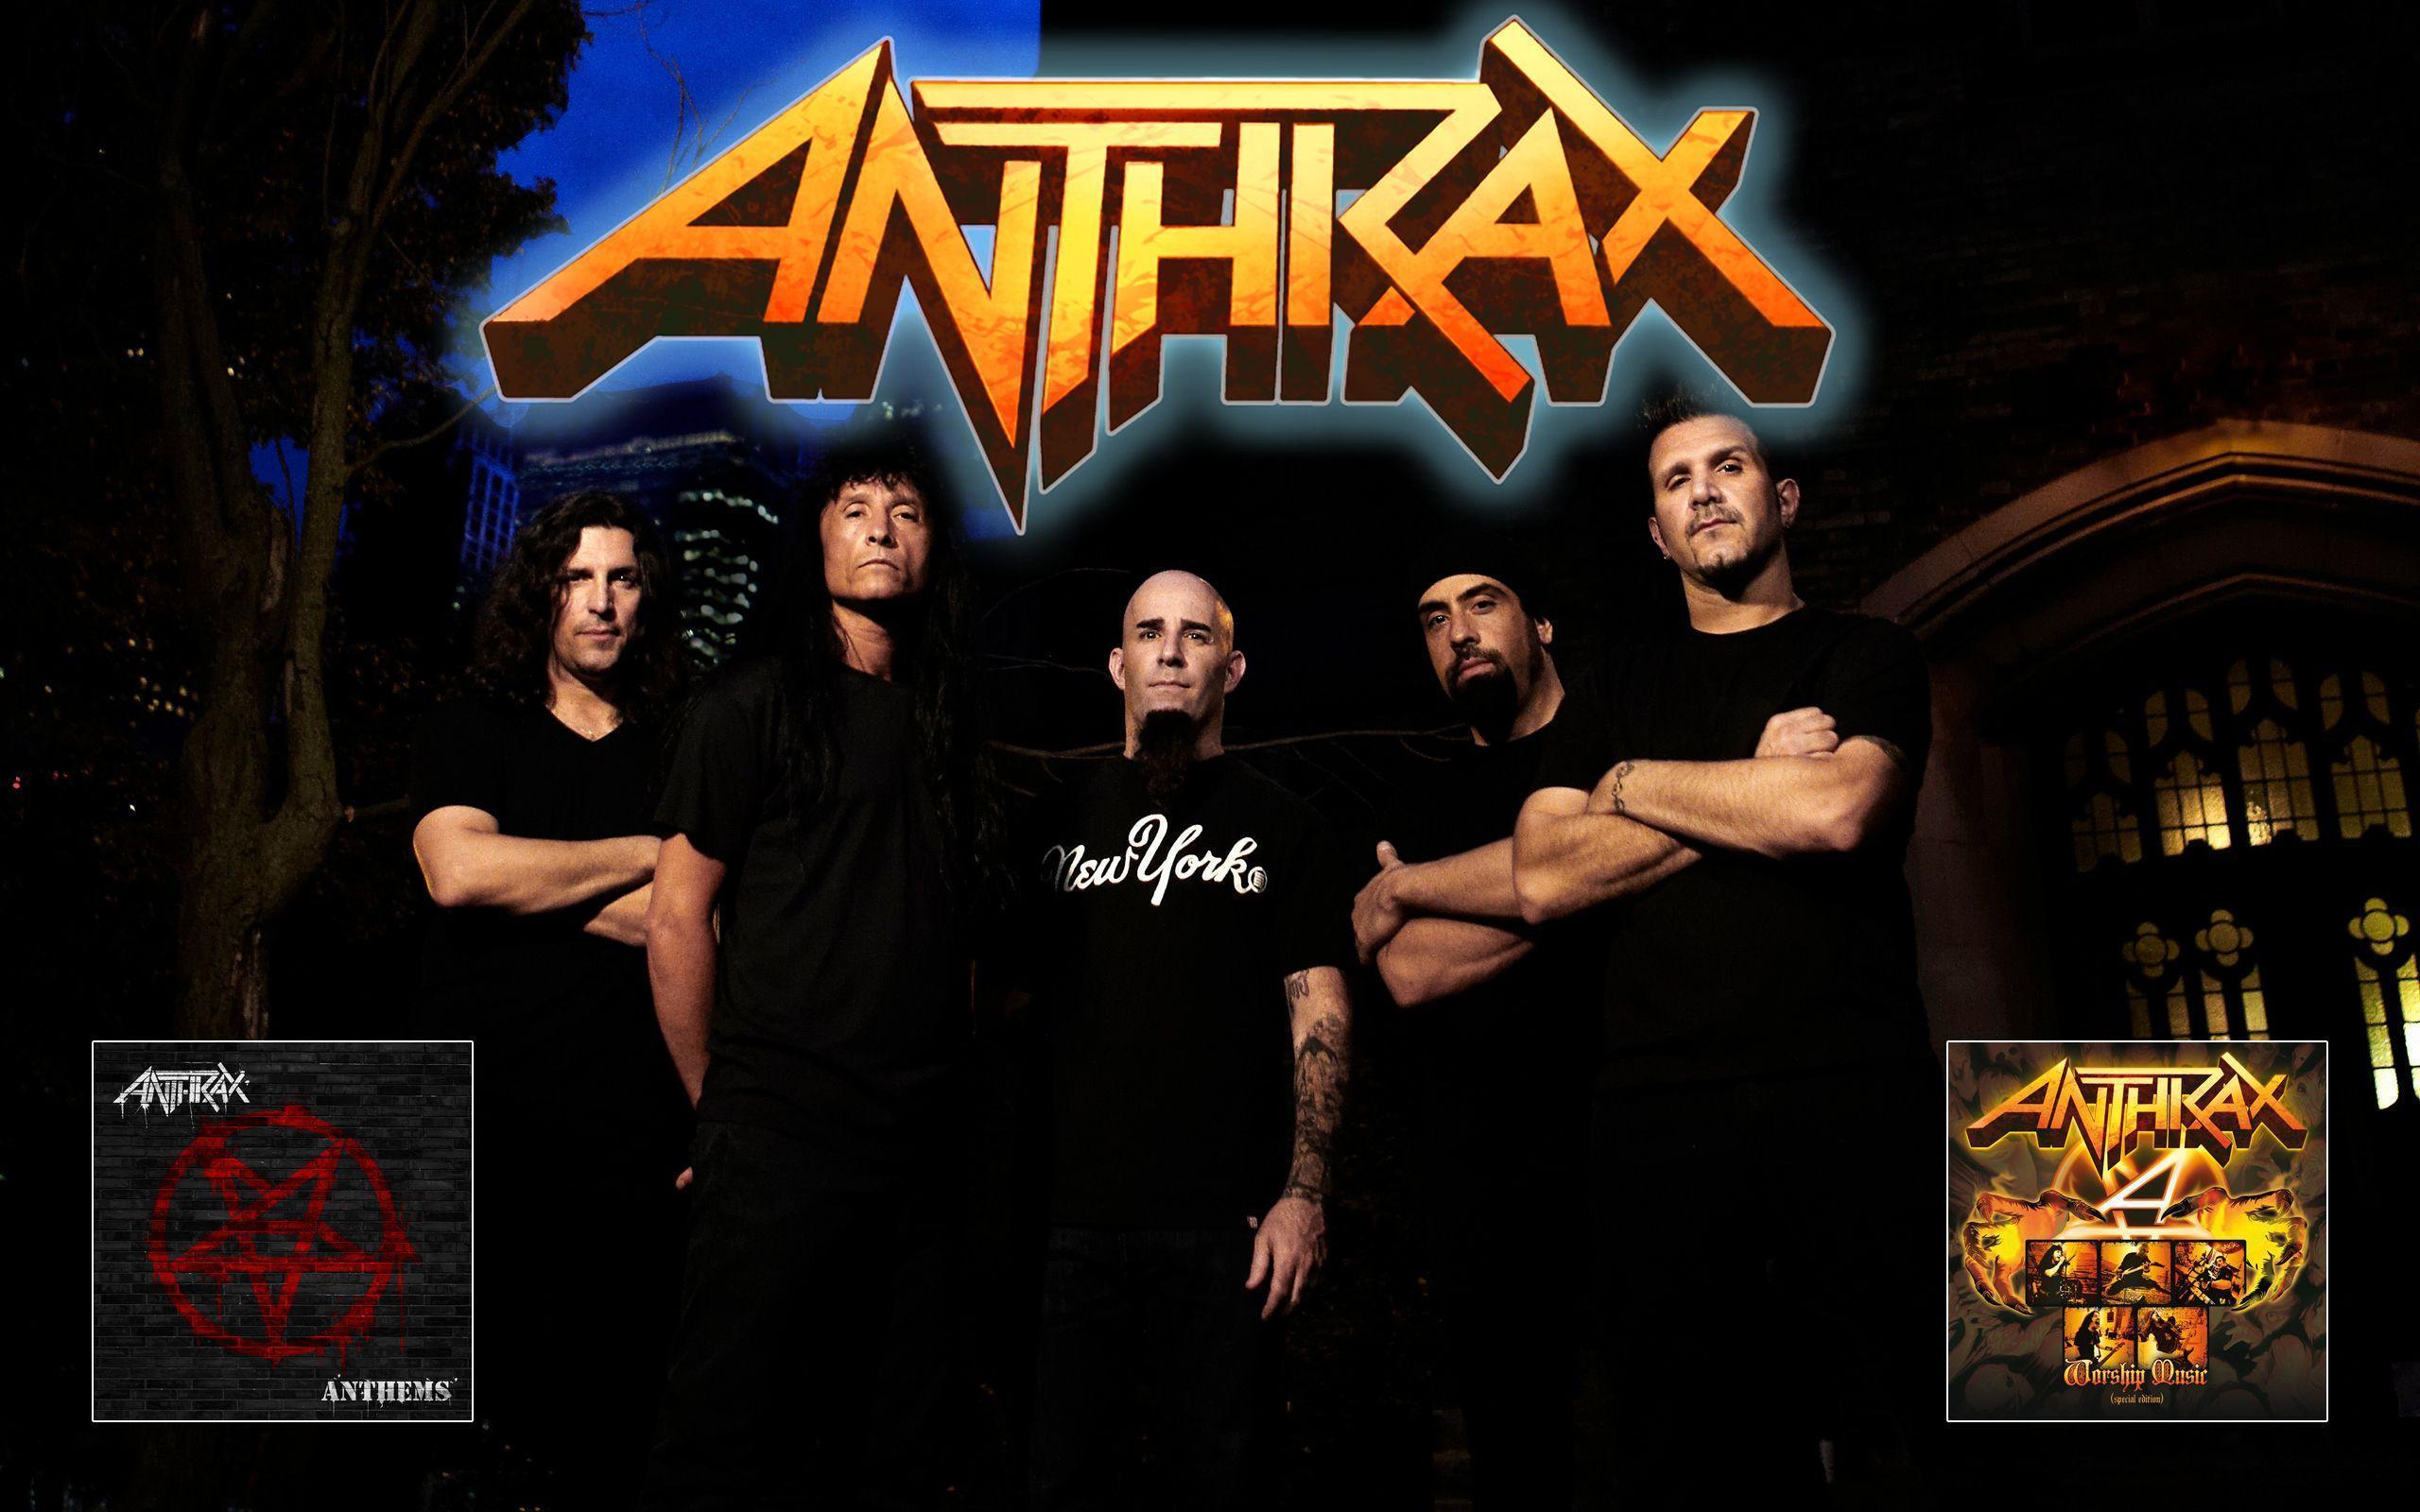 HD Anthrax Wallpaper and Photo. HD Music Wallpaper